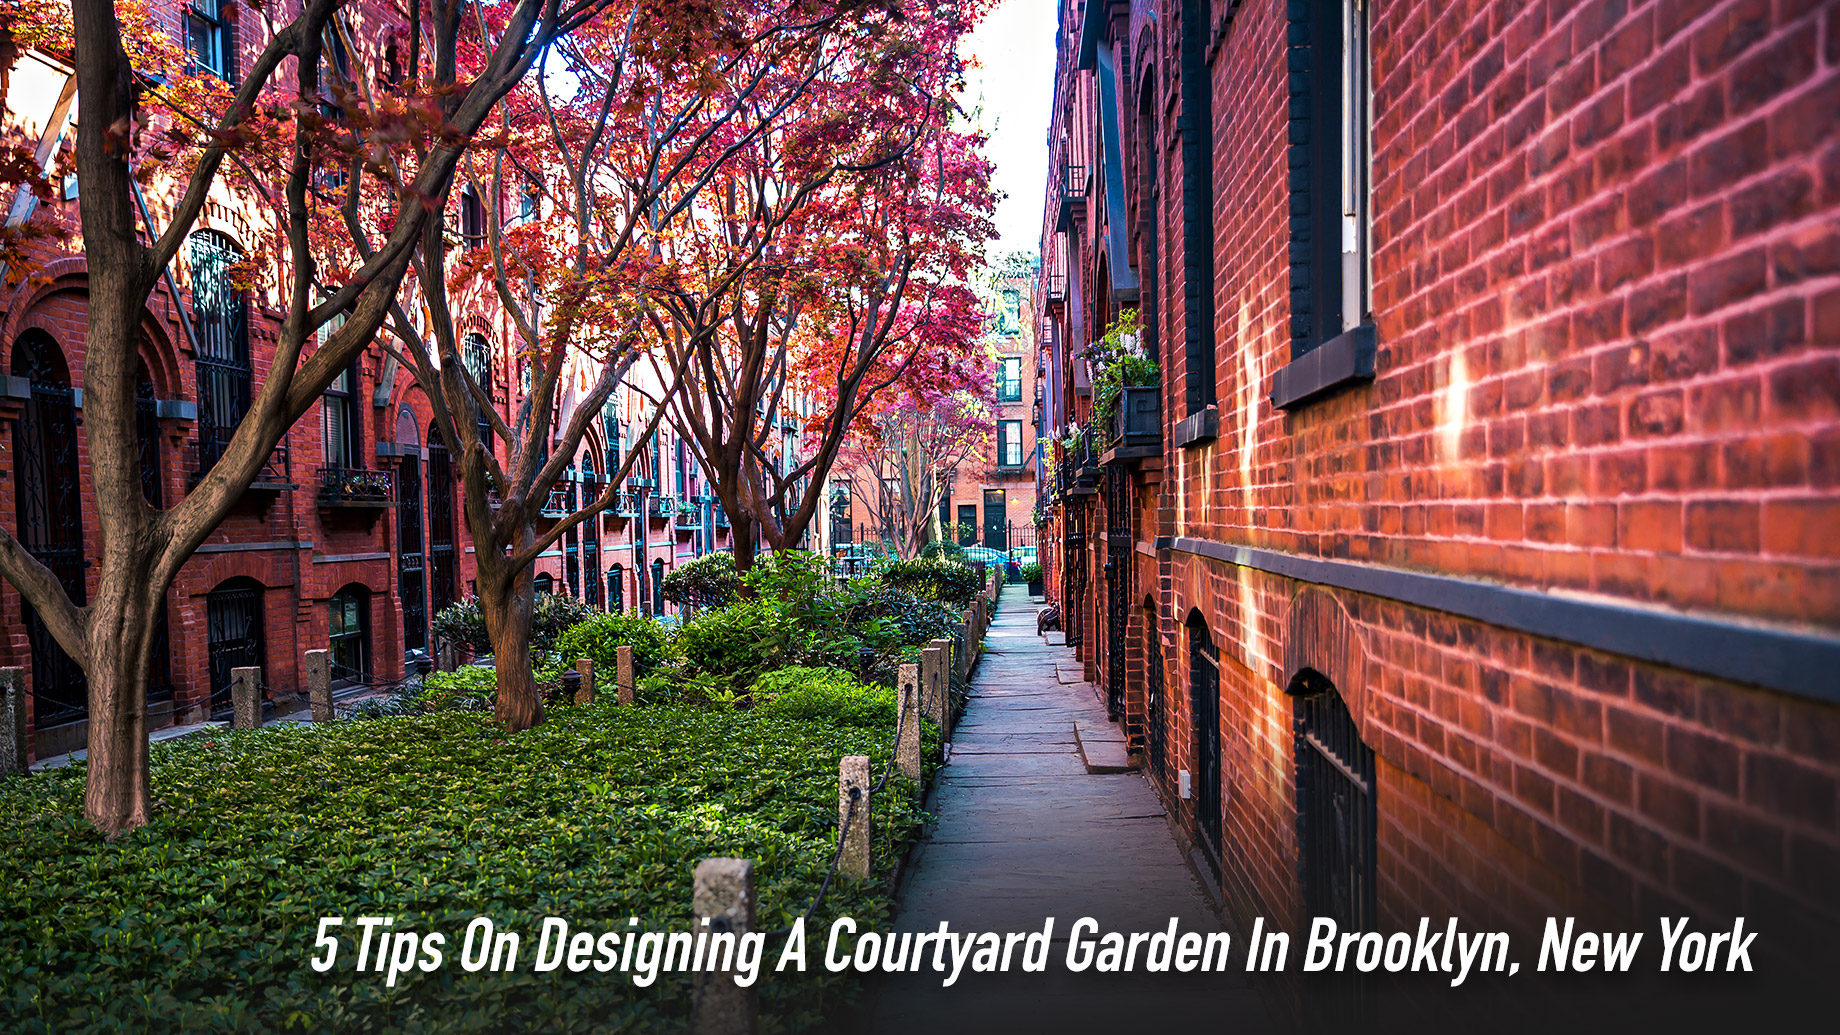 5 Tips On Designing A Courtyard Garden In Brooklyn, New York